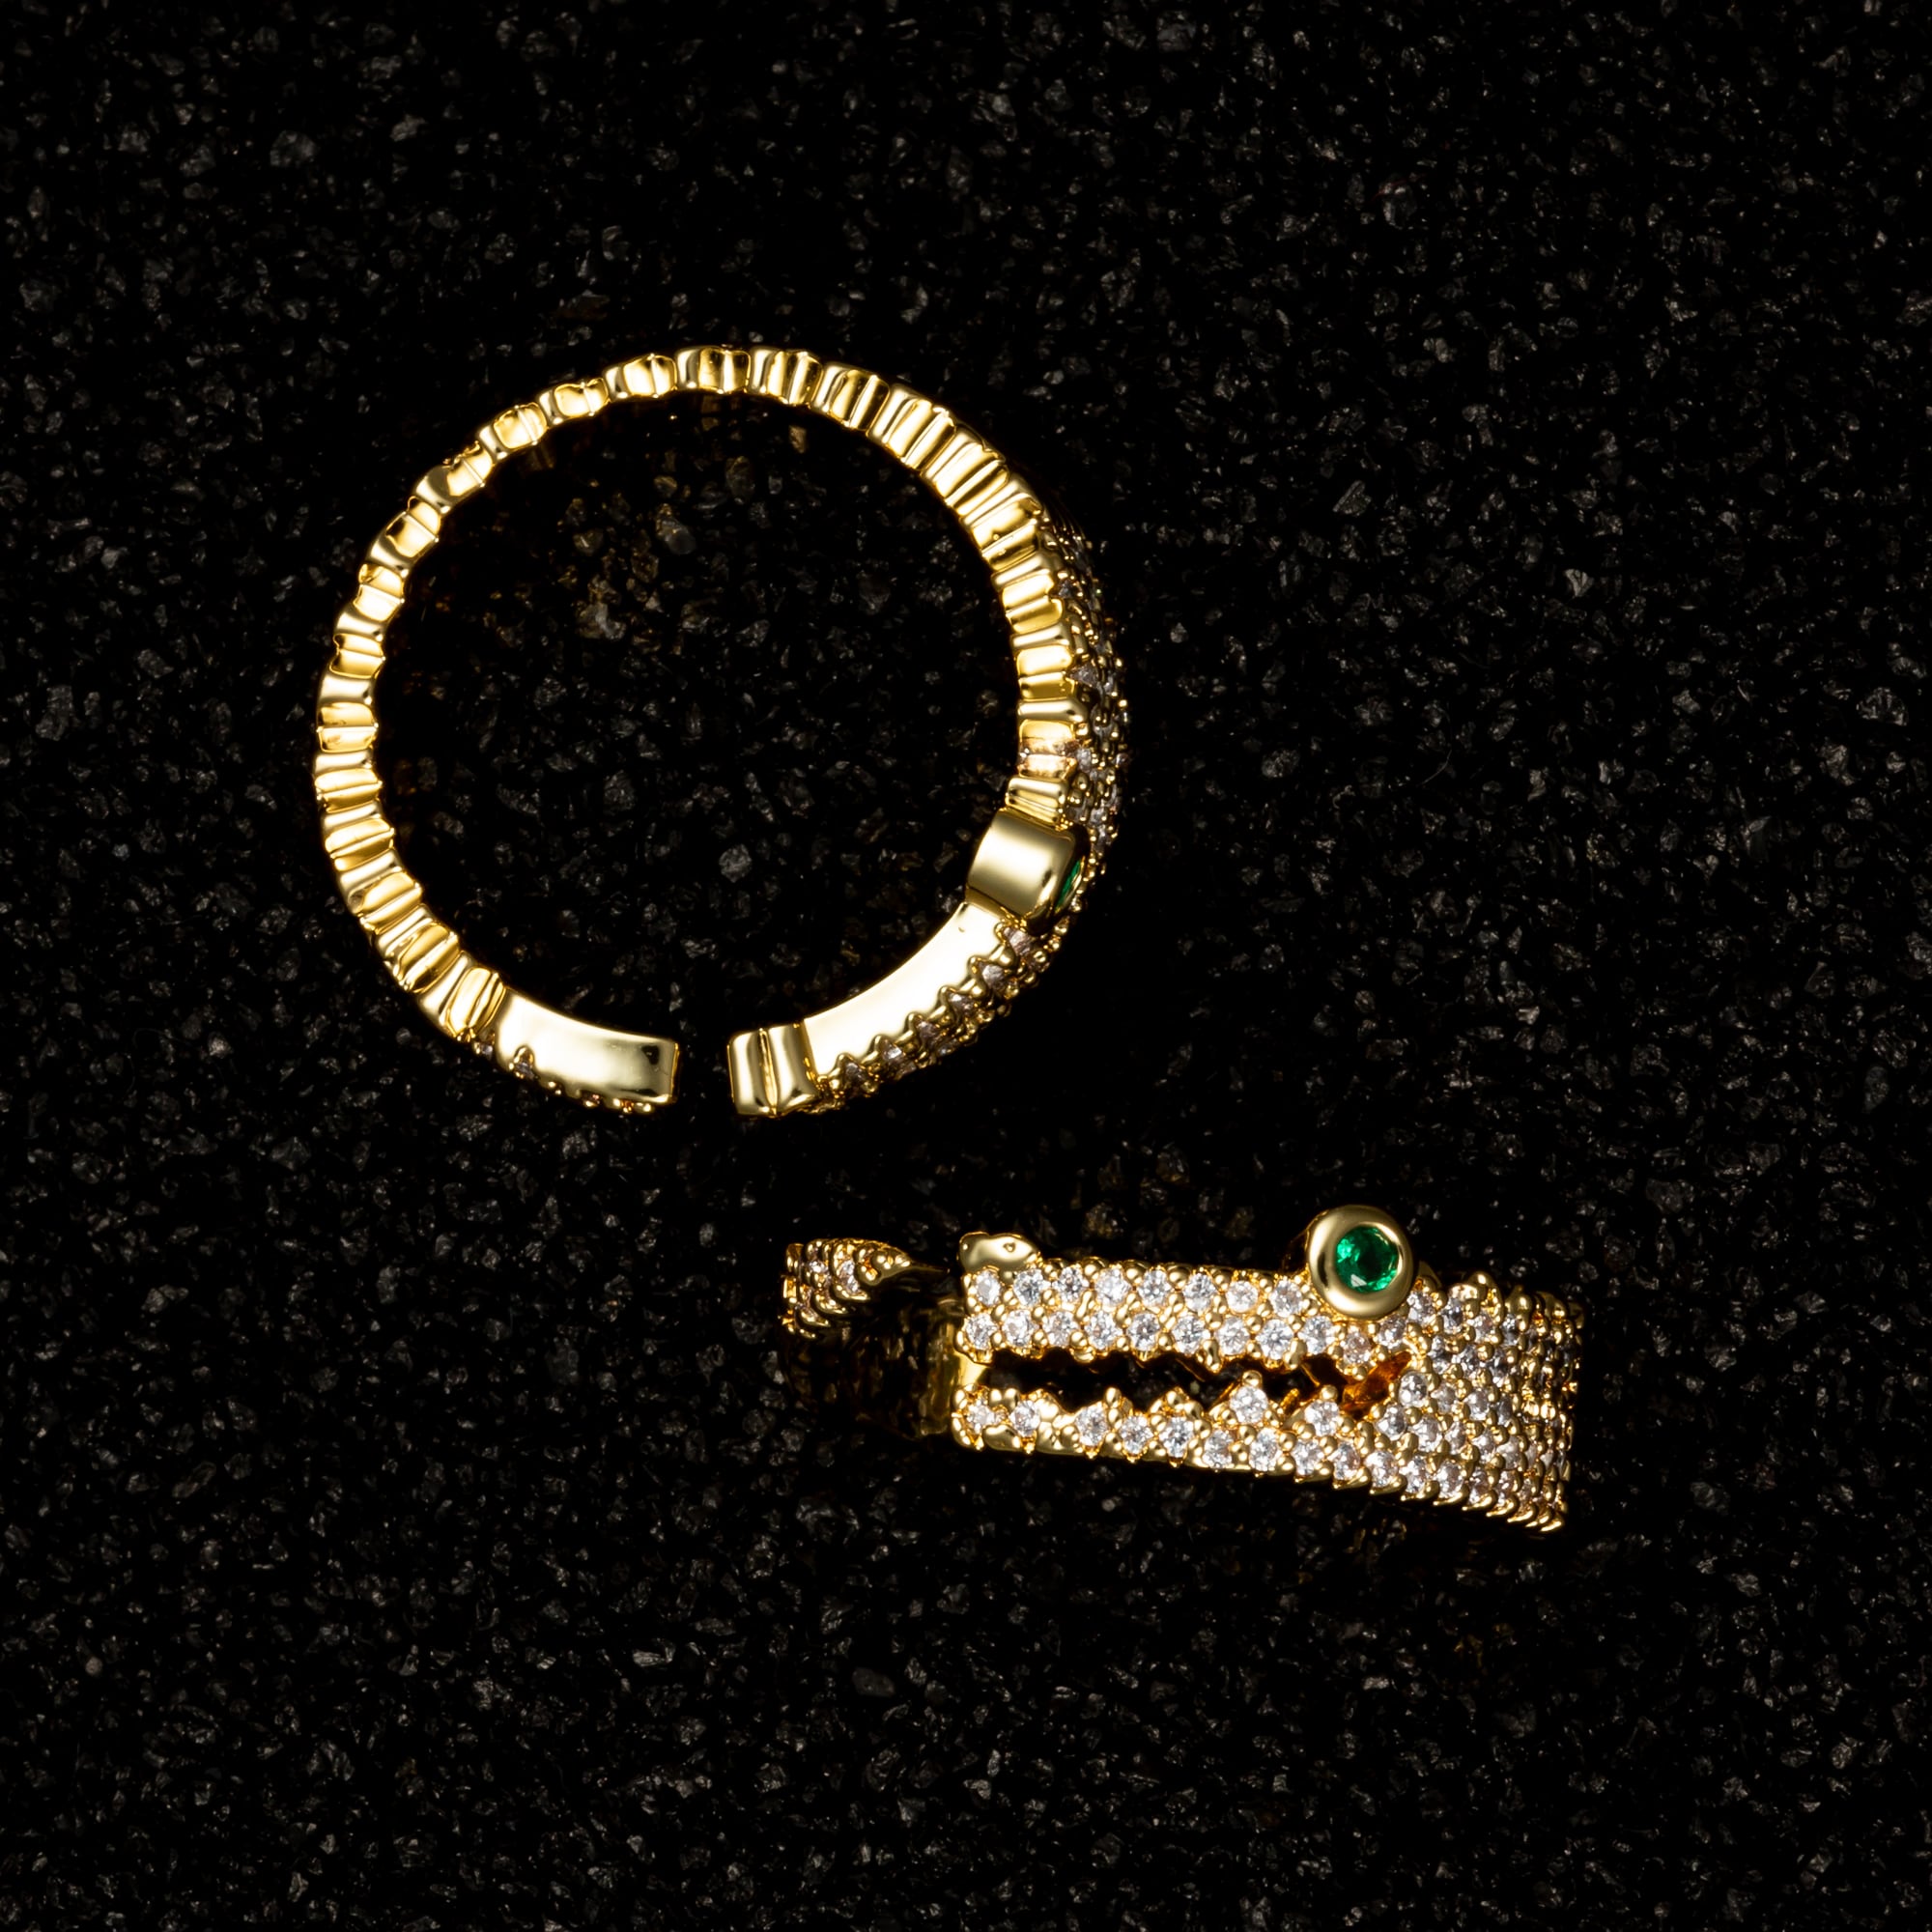 Alligator Ring with Gemstones - Rings